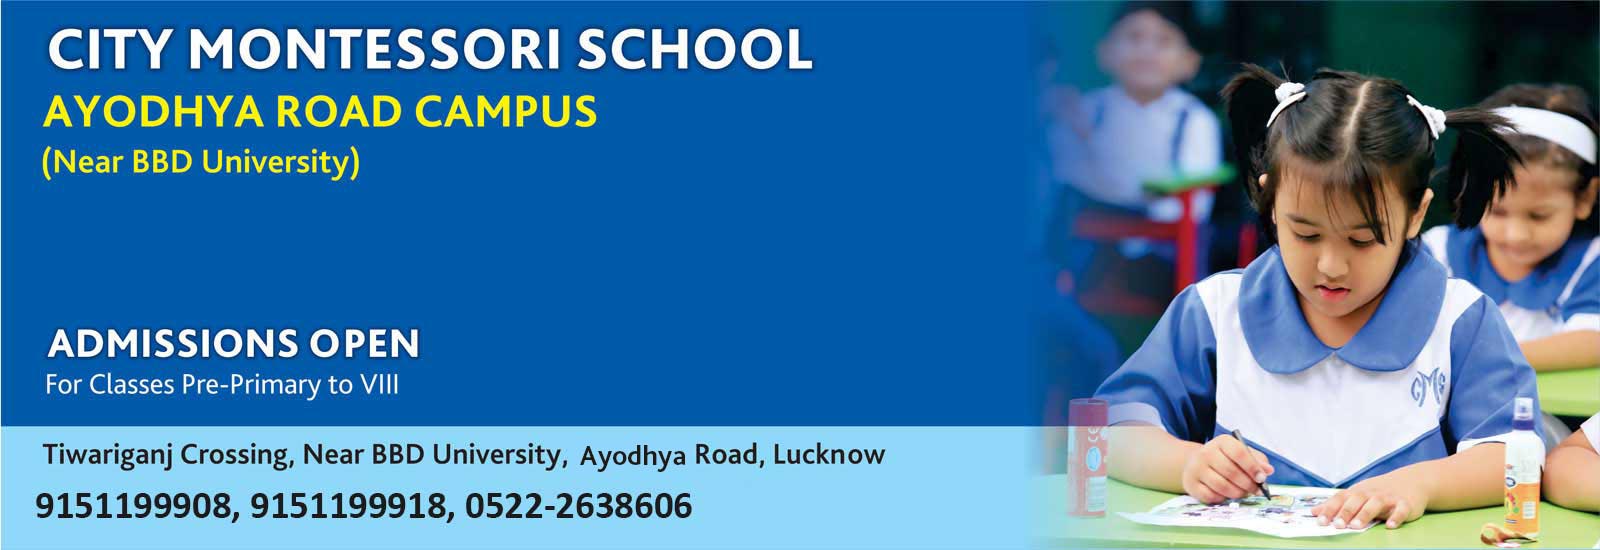 CMS Ayodhya Road Campus